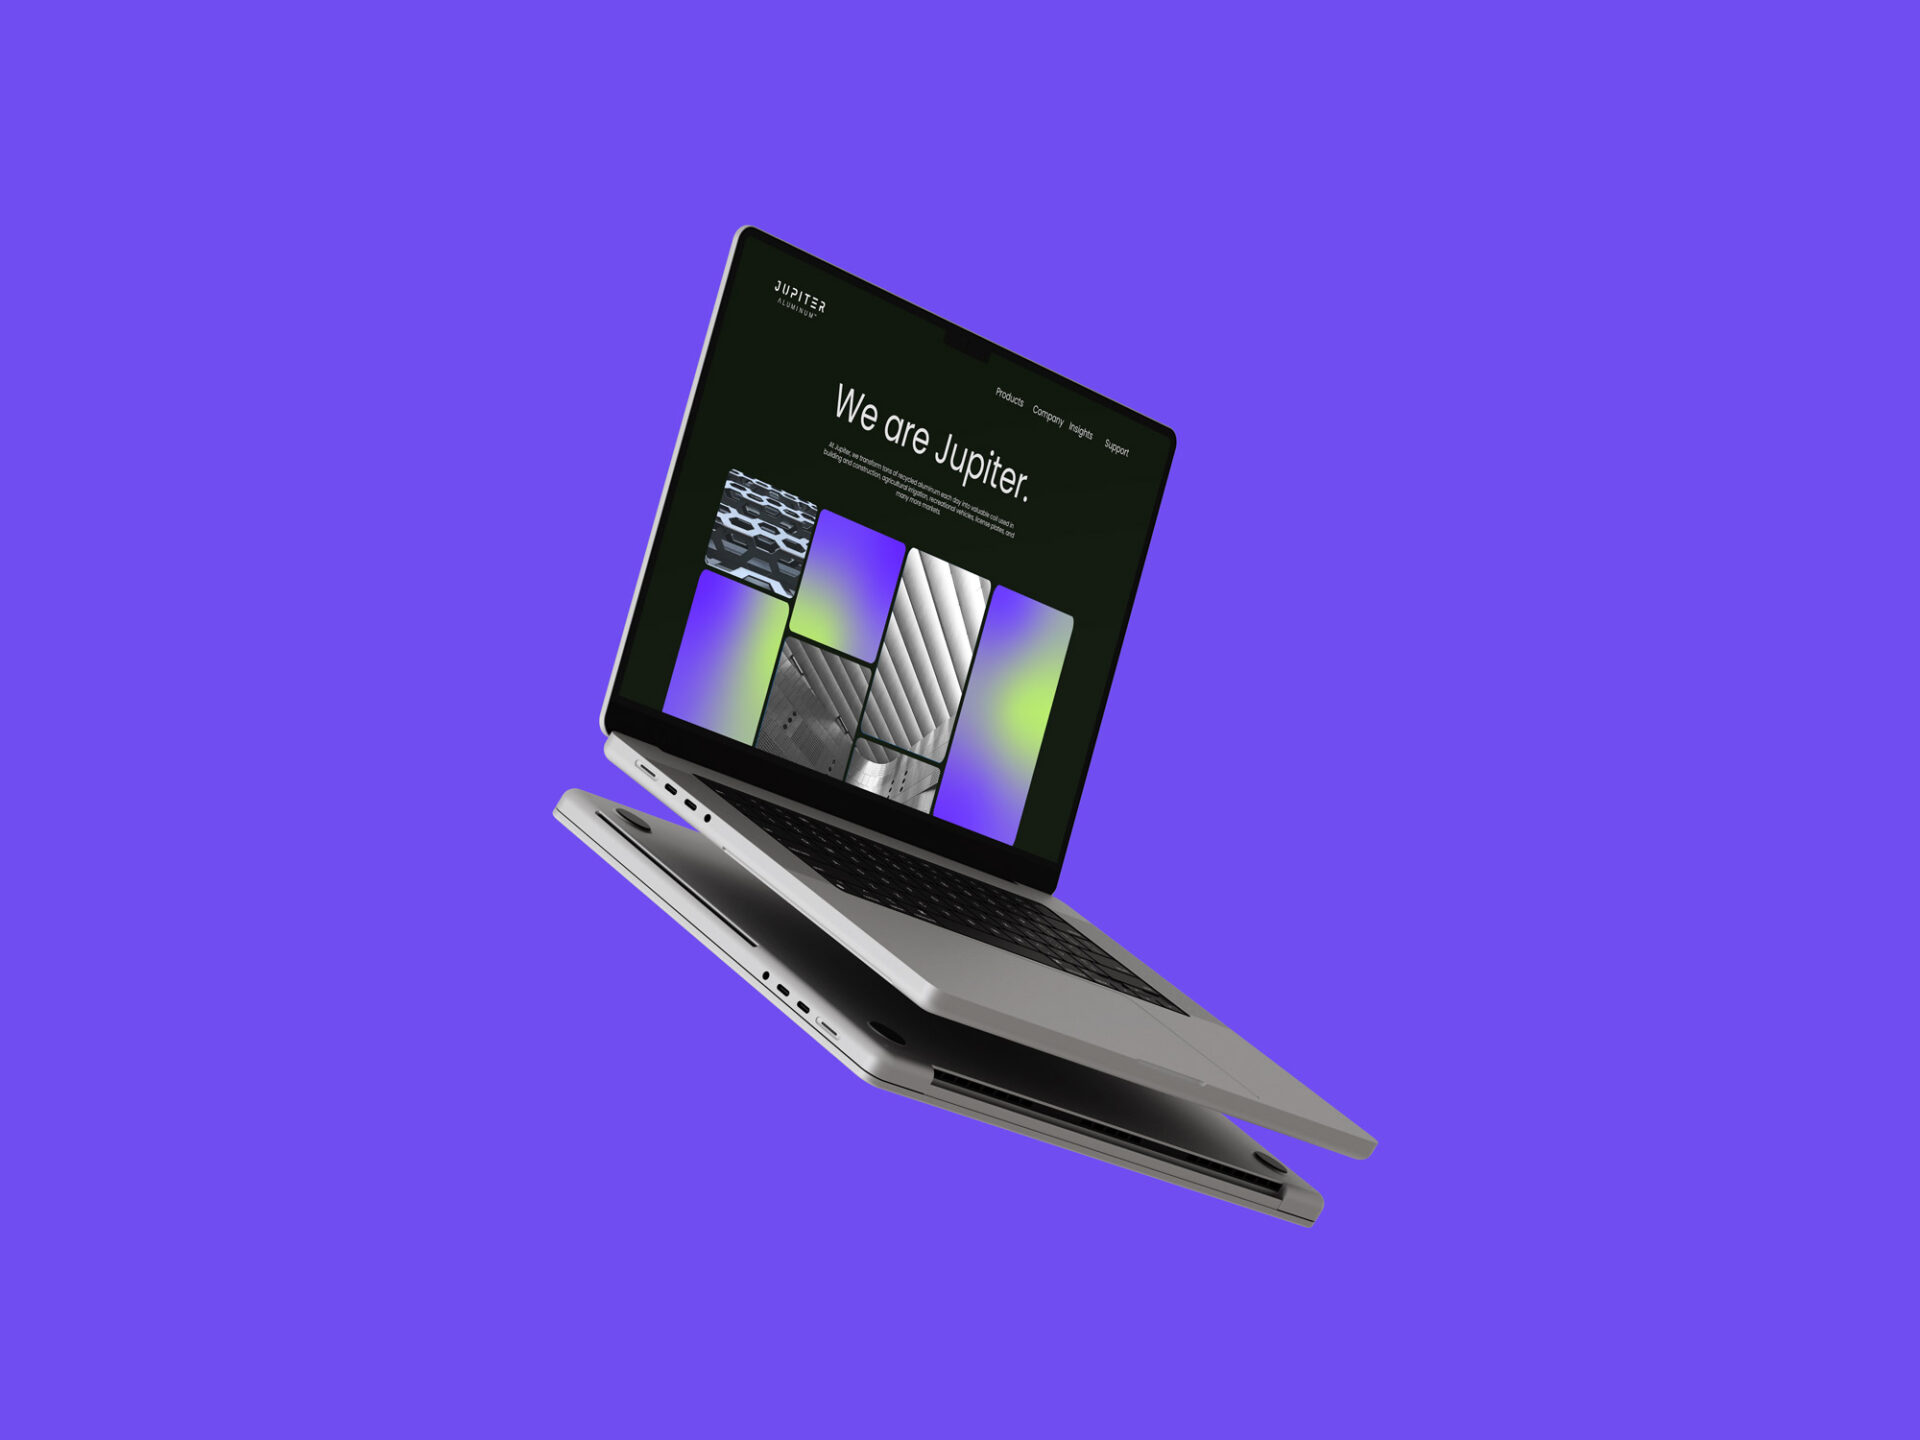 The laptop computer displays ArtVersion's accessible and usable web design portfolio work.